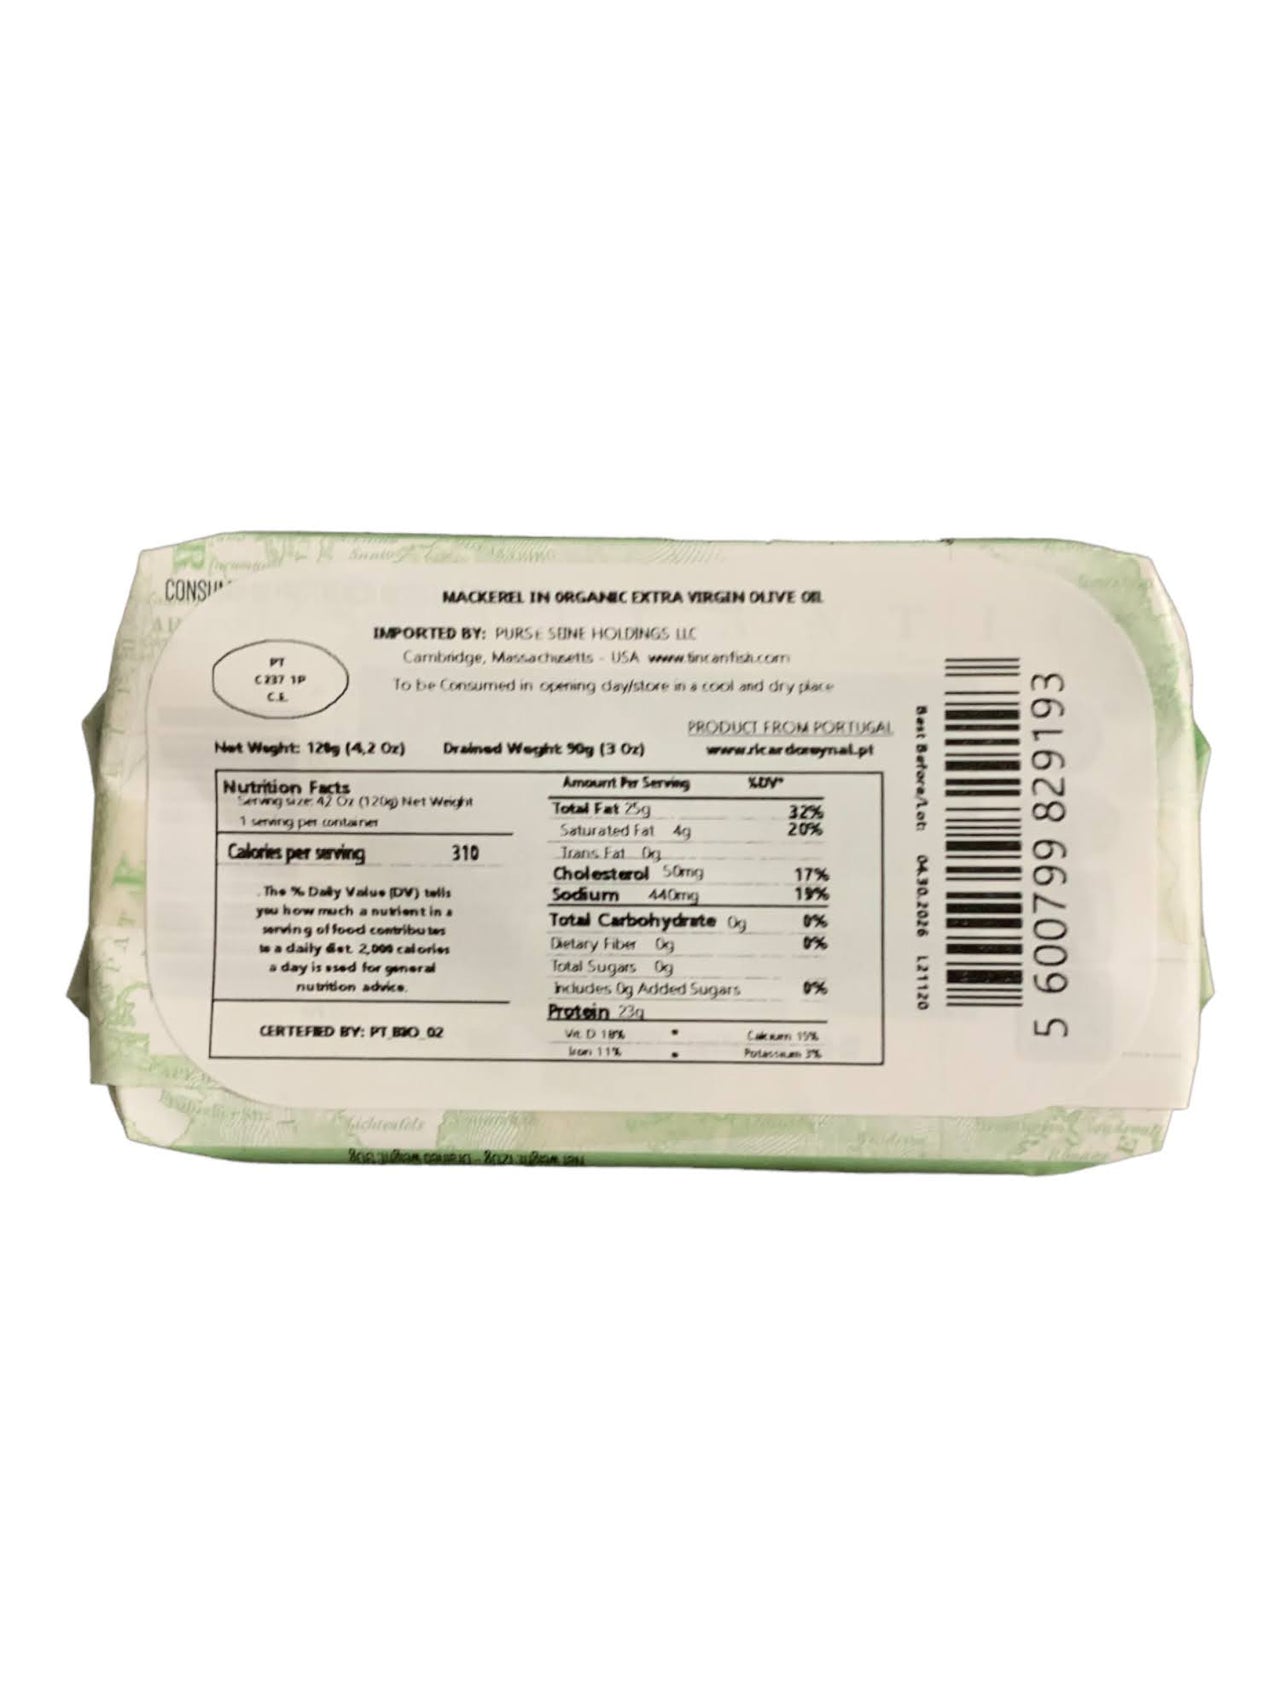 MAR Brand Mackerel in Organic EVOO - 6 Pack - TinCanFish